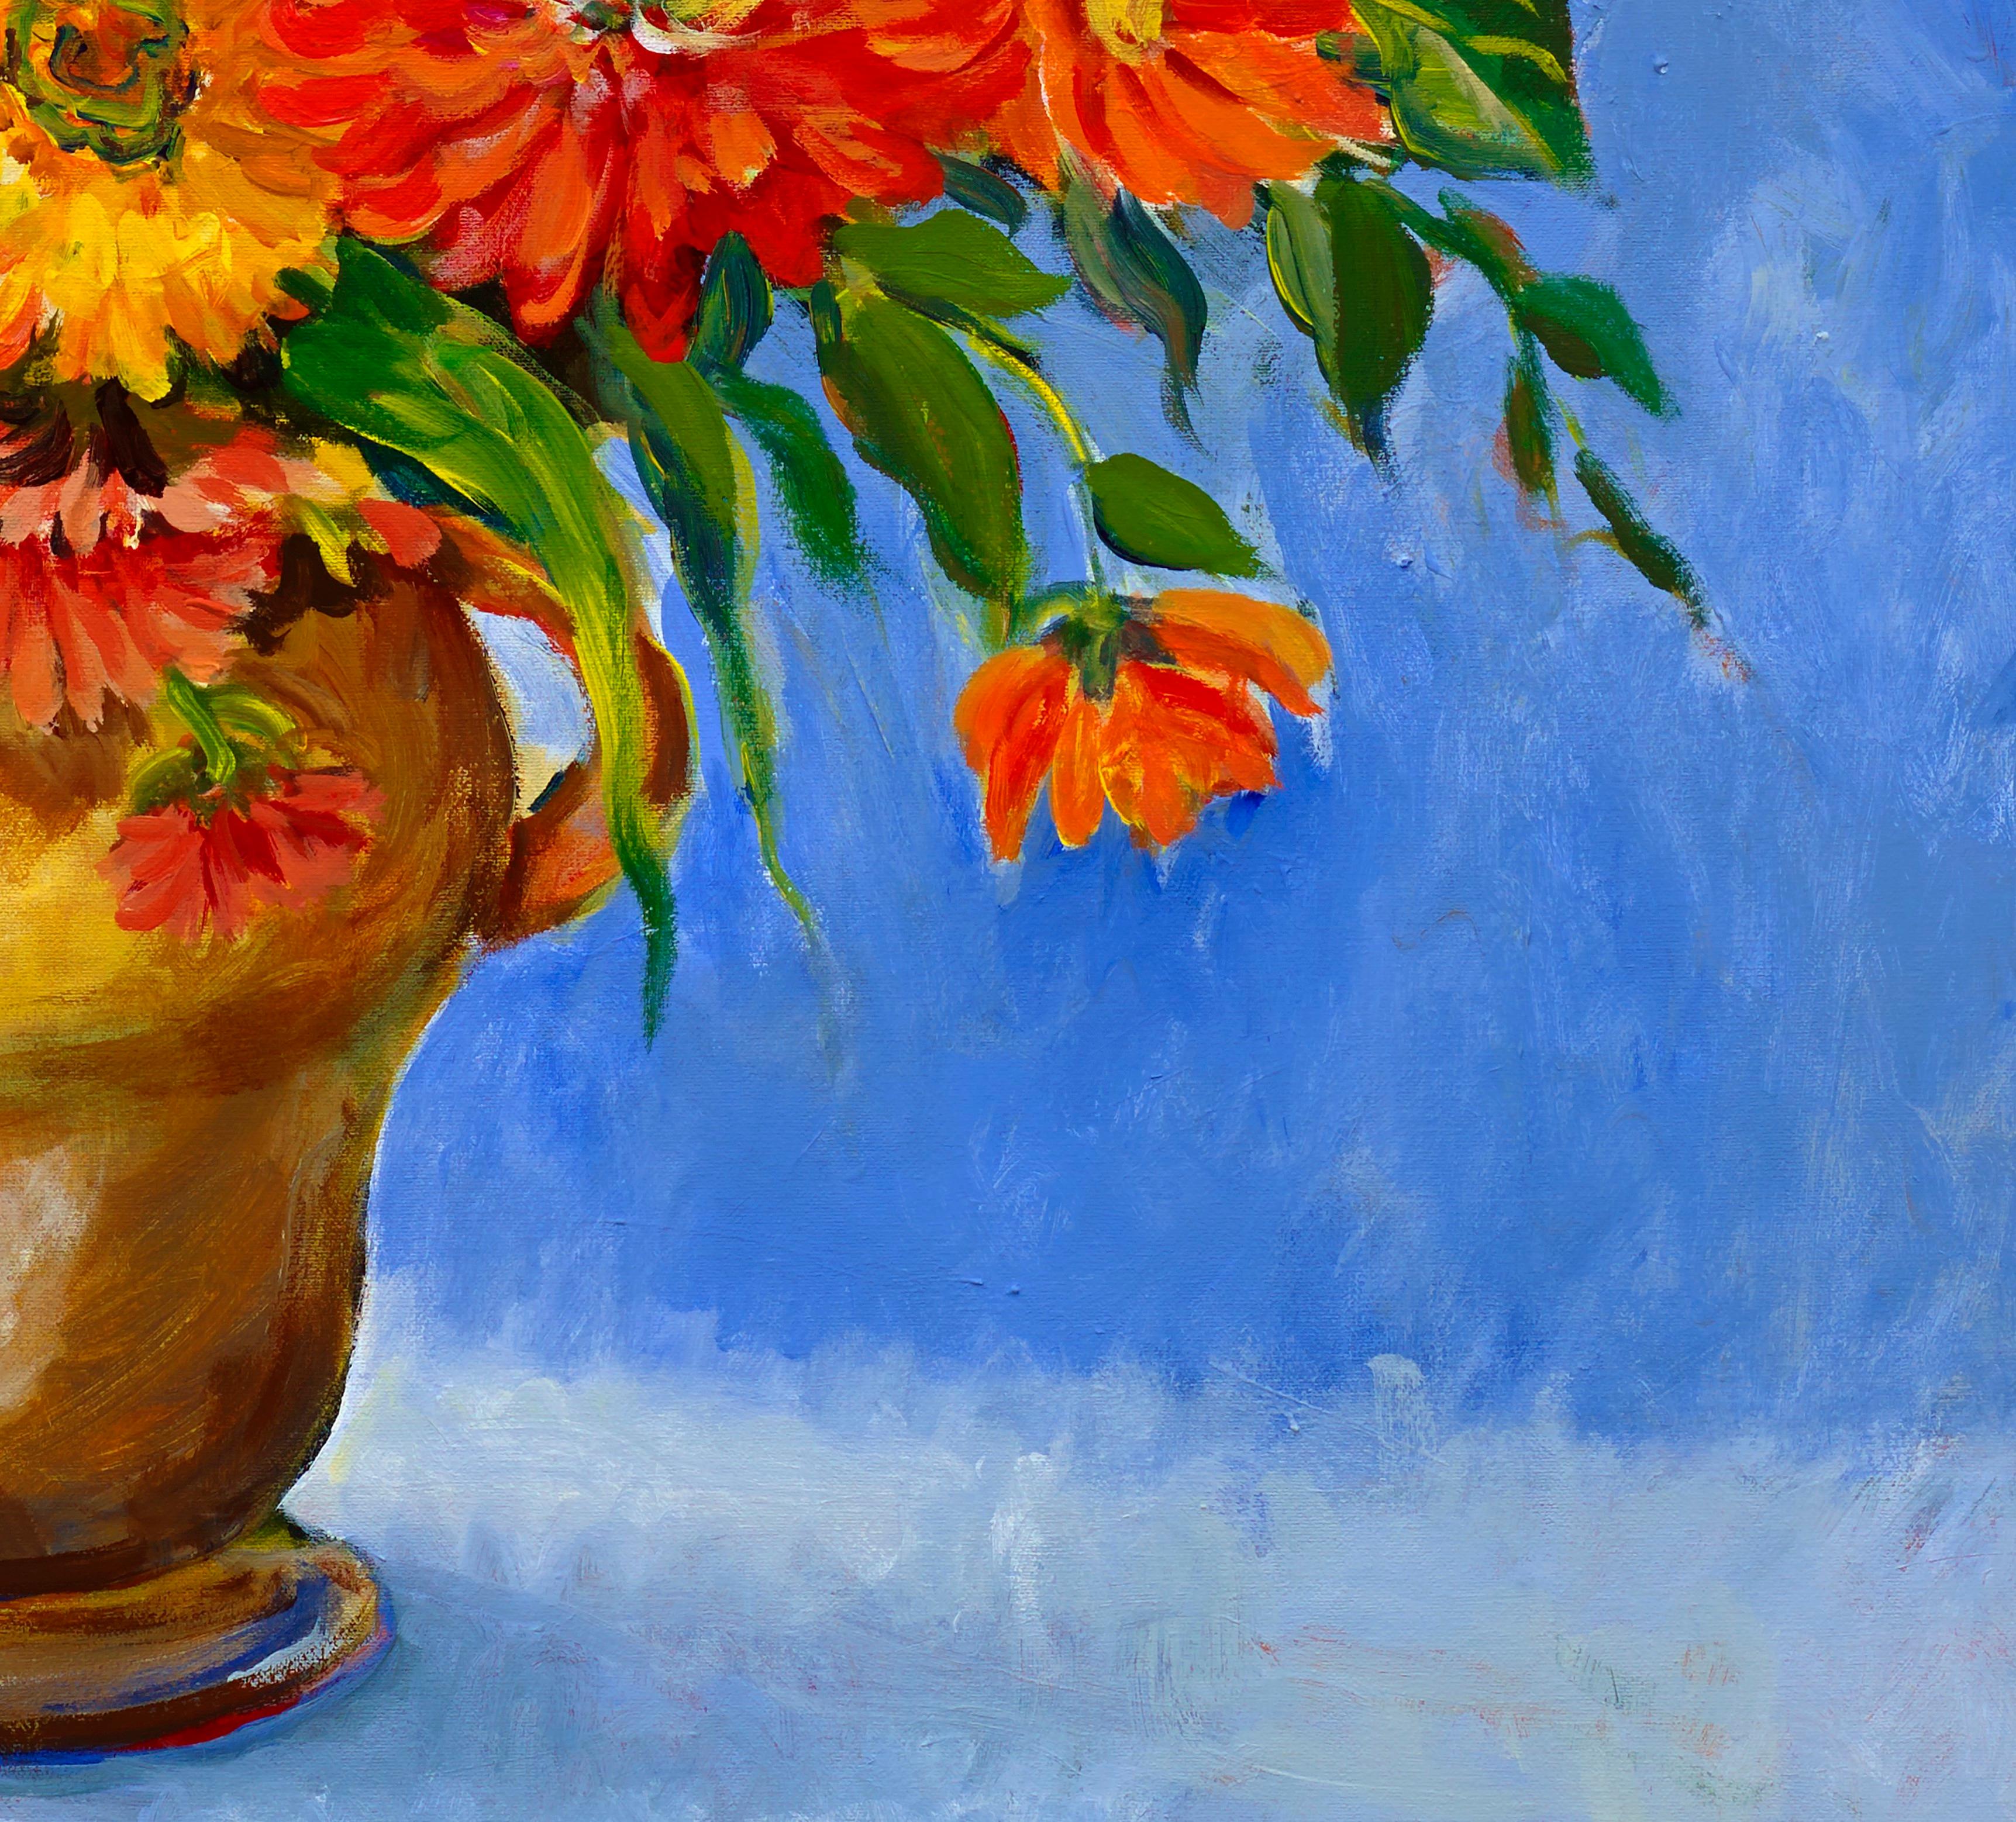 Zinnias, Original Contemporary Impressionist Floral Still Life Painting, 2014
36